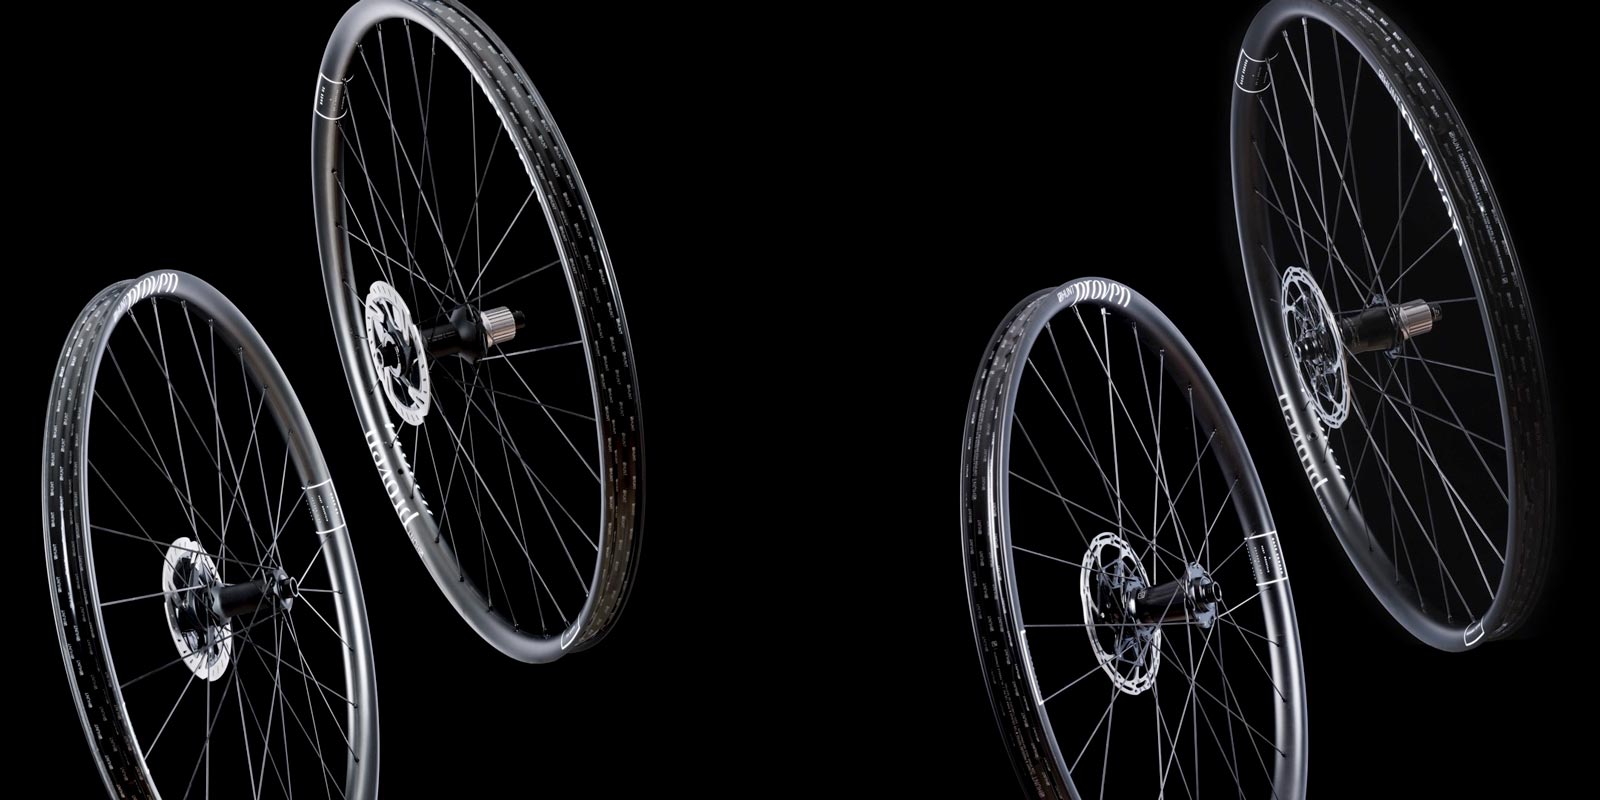 hunt proven race carbon wheels for xc enduro 30mm internal width rims